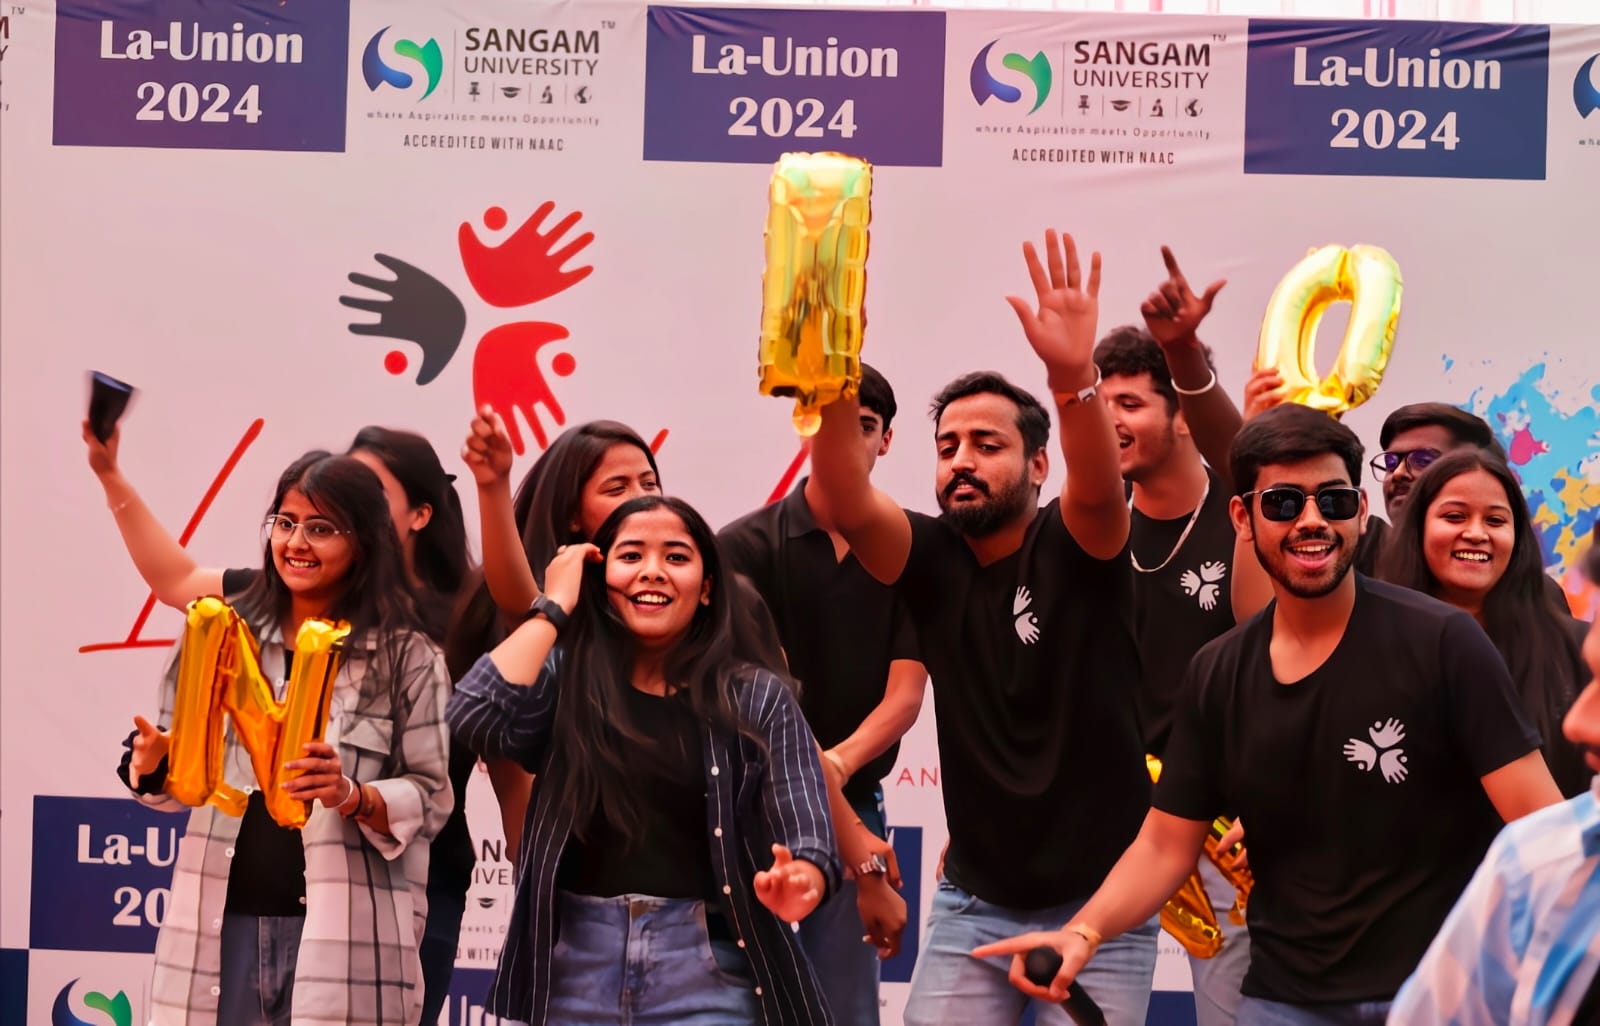 Sangam University Sets Vibrant Tone for La Union 2024 Kickoff